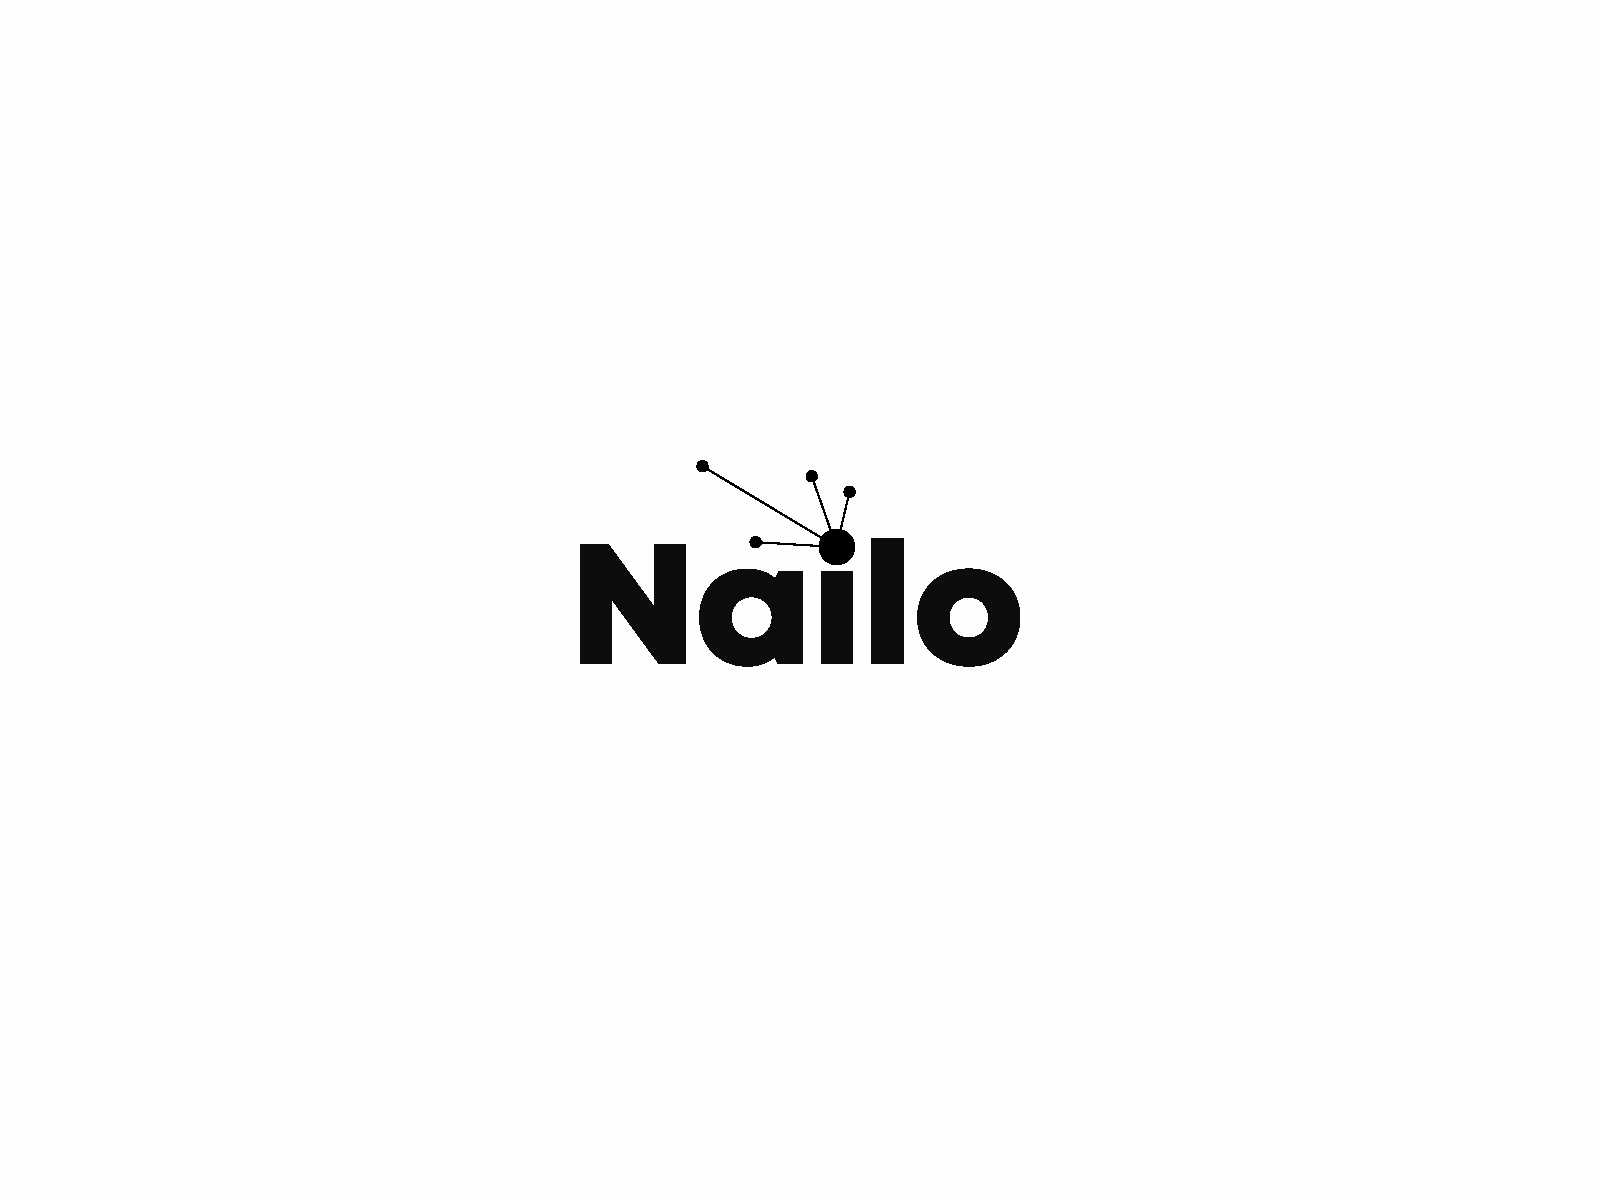 Nailo logo animation